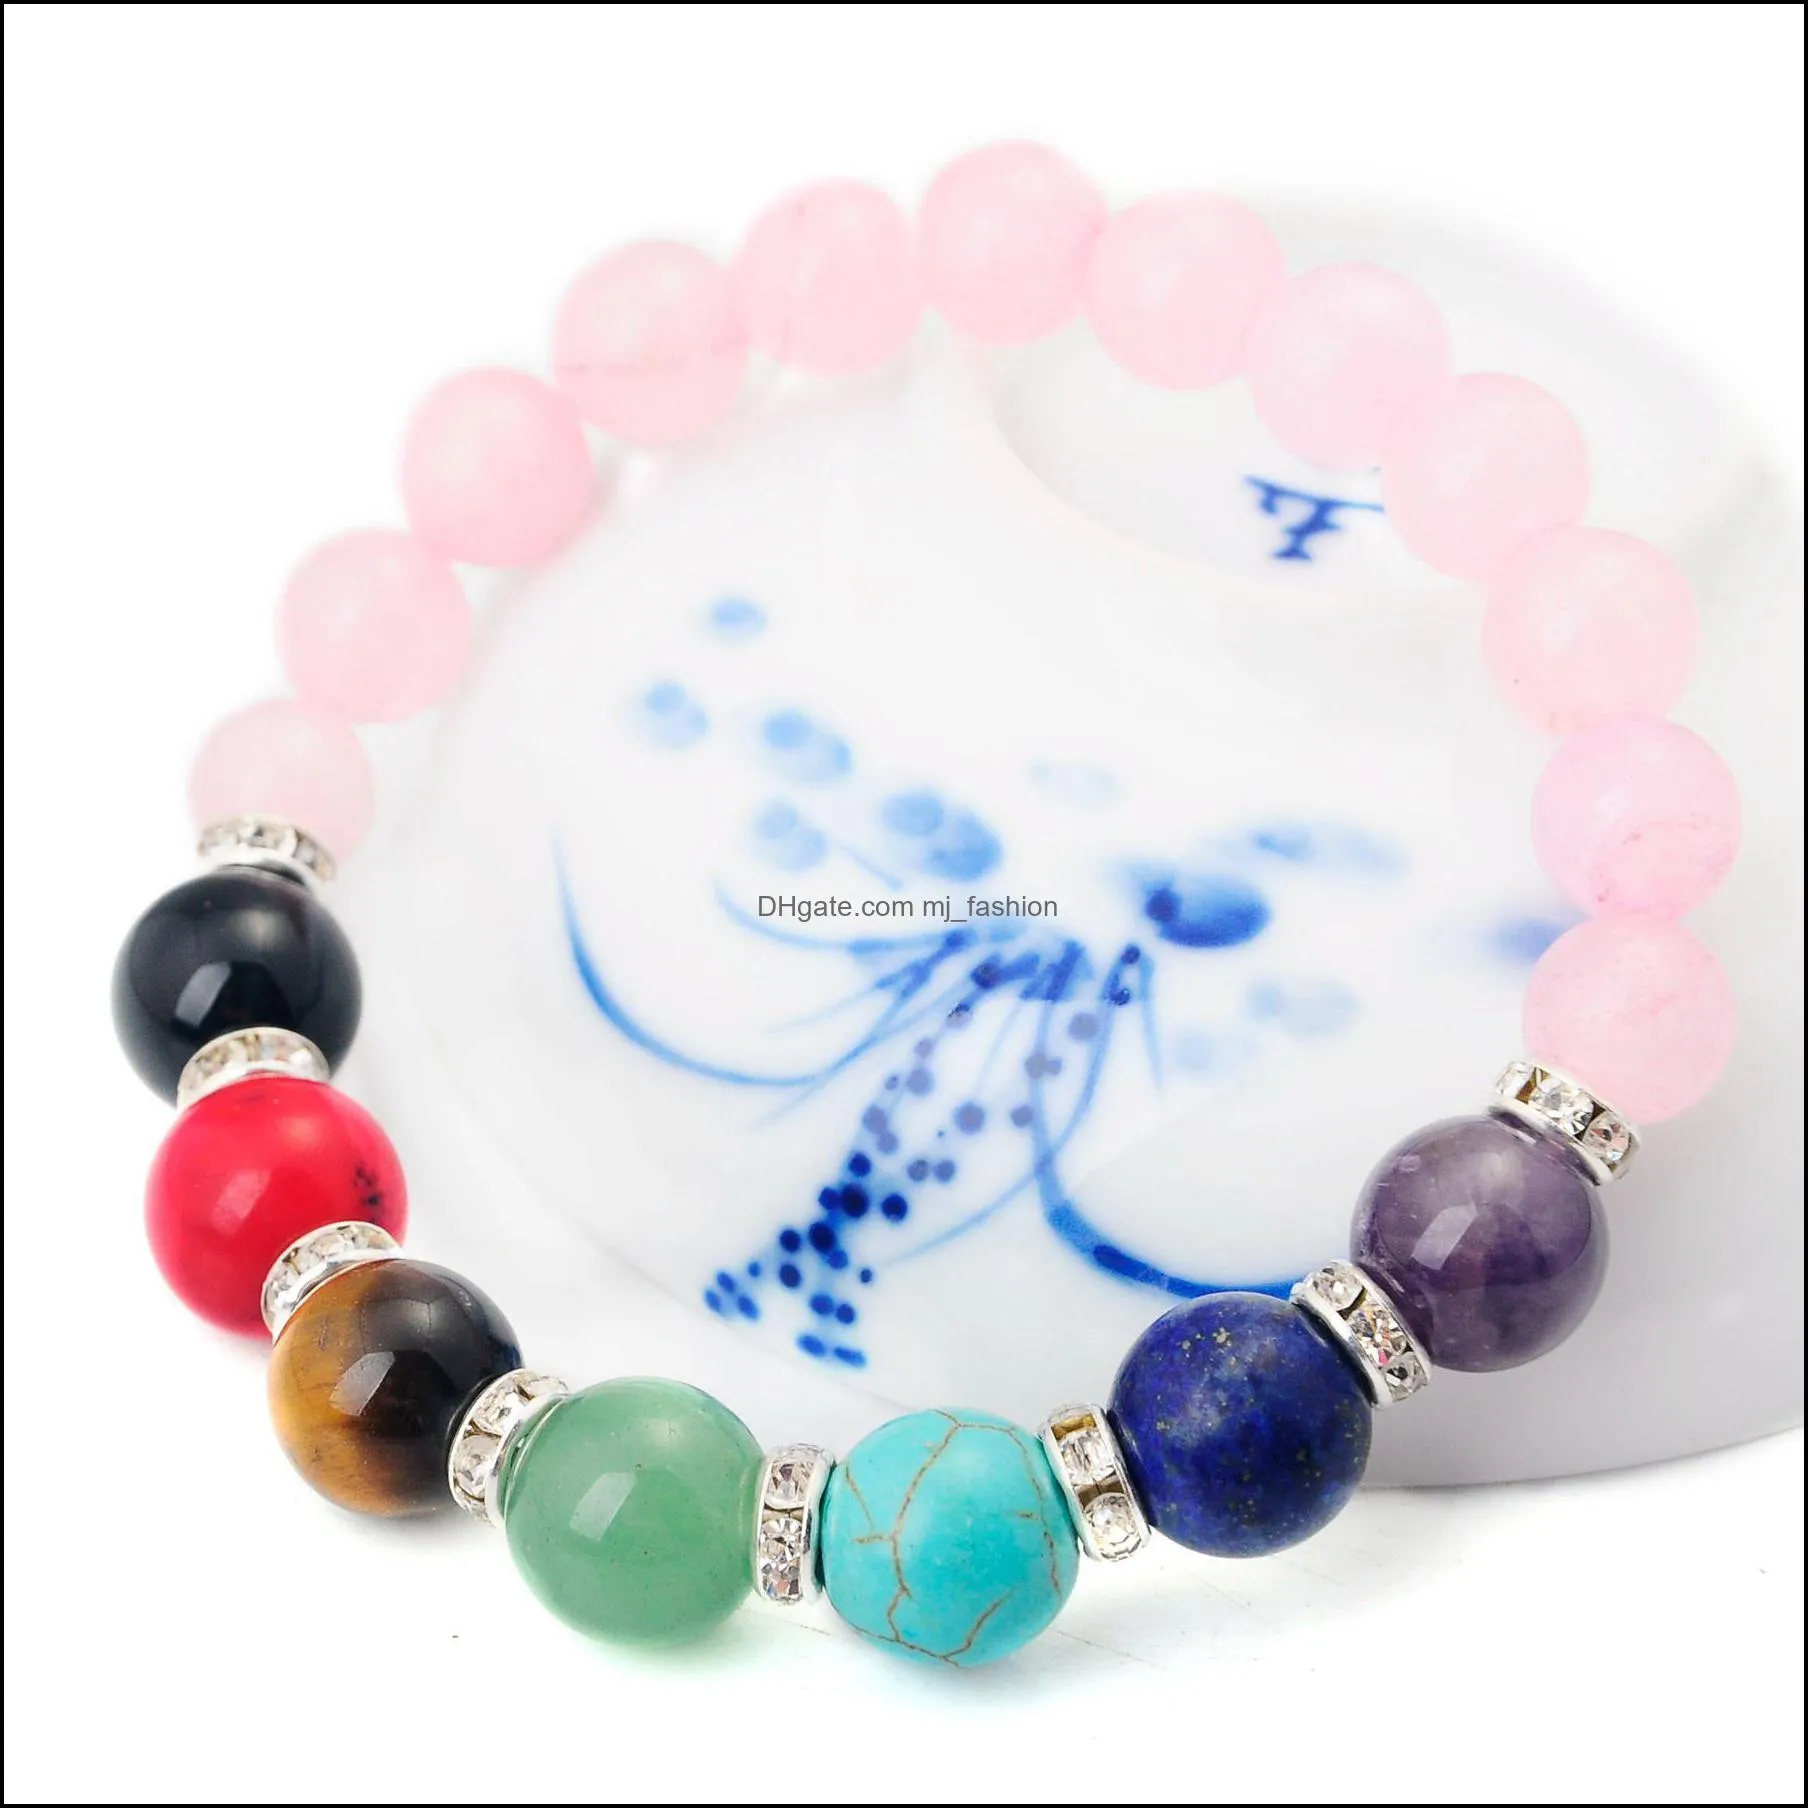 joya gift 14sb1037-8mm natural rose quartz beads bracelet 7 chakra gemstone crystal healing reiki women jewelry bangle free shipping